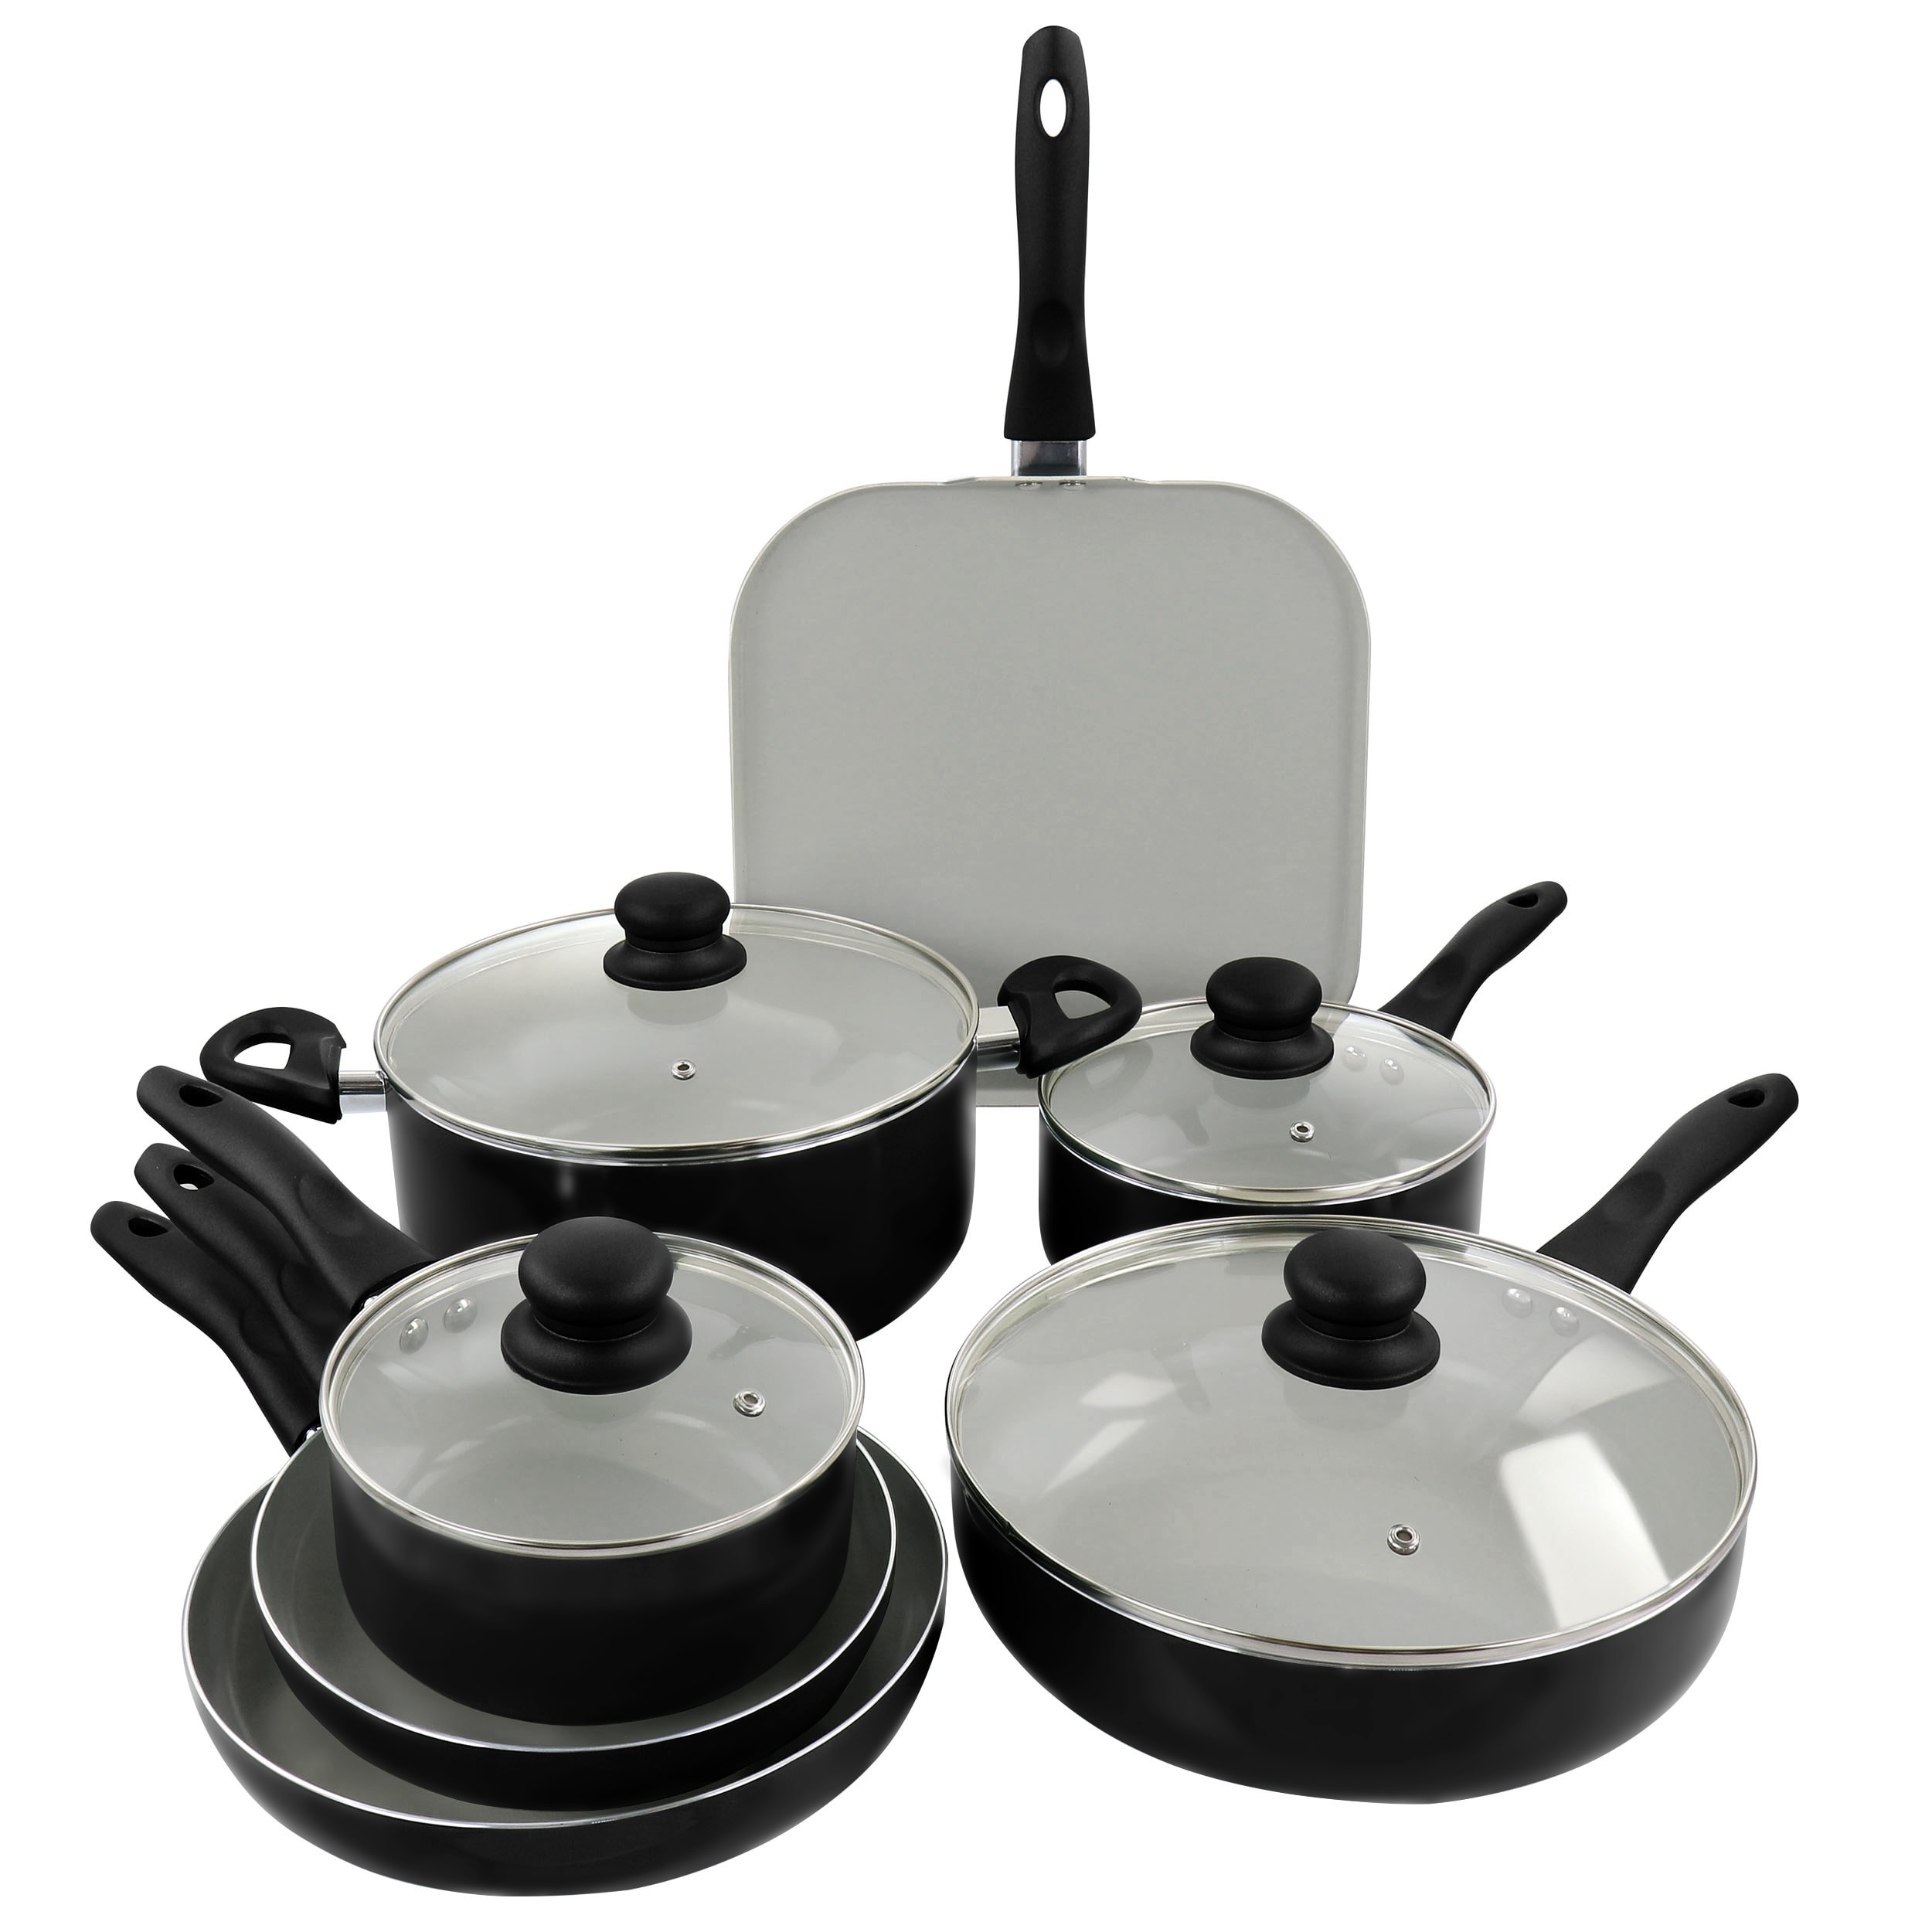 https://ak1.ostkcdn.com/images/products/is/images/direct/47fe9887450c7ddf614e628e854b65ea75e62cc5/Ceramic-Nonstick-Aluminum-11-Piece-Cookware-Set-in-Black.jpg